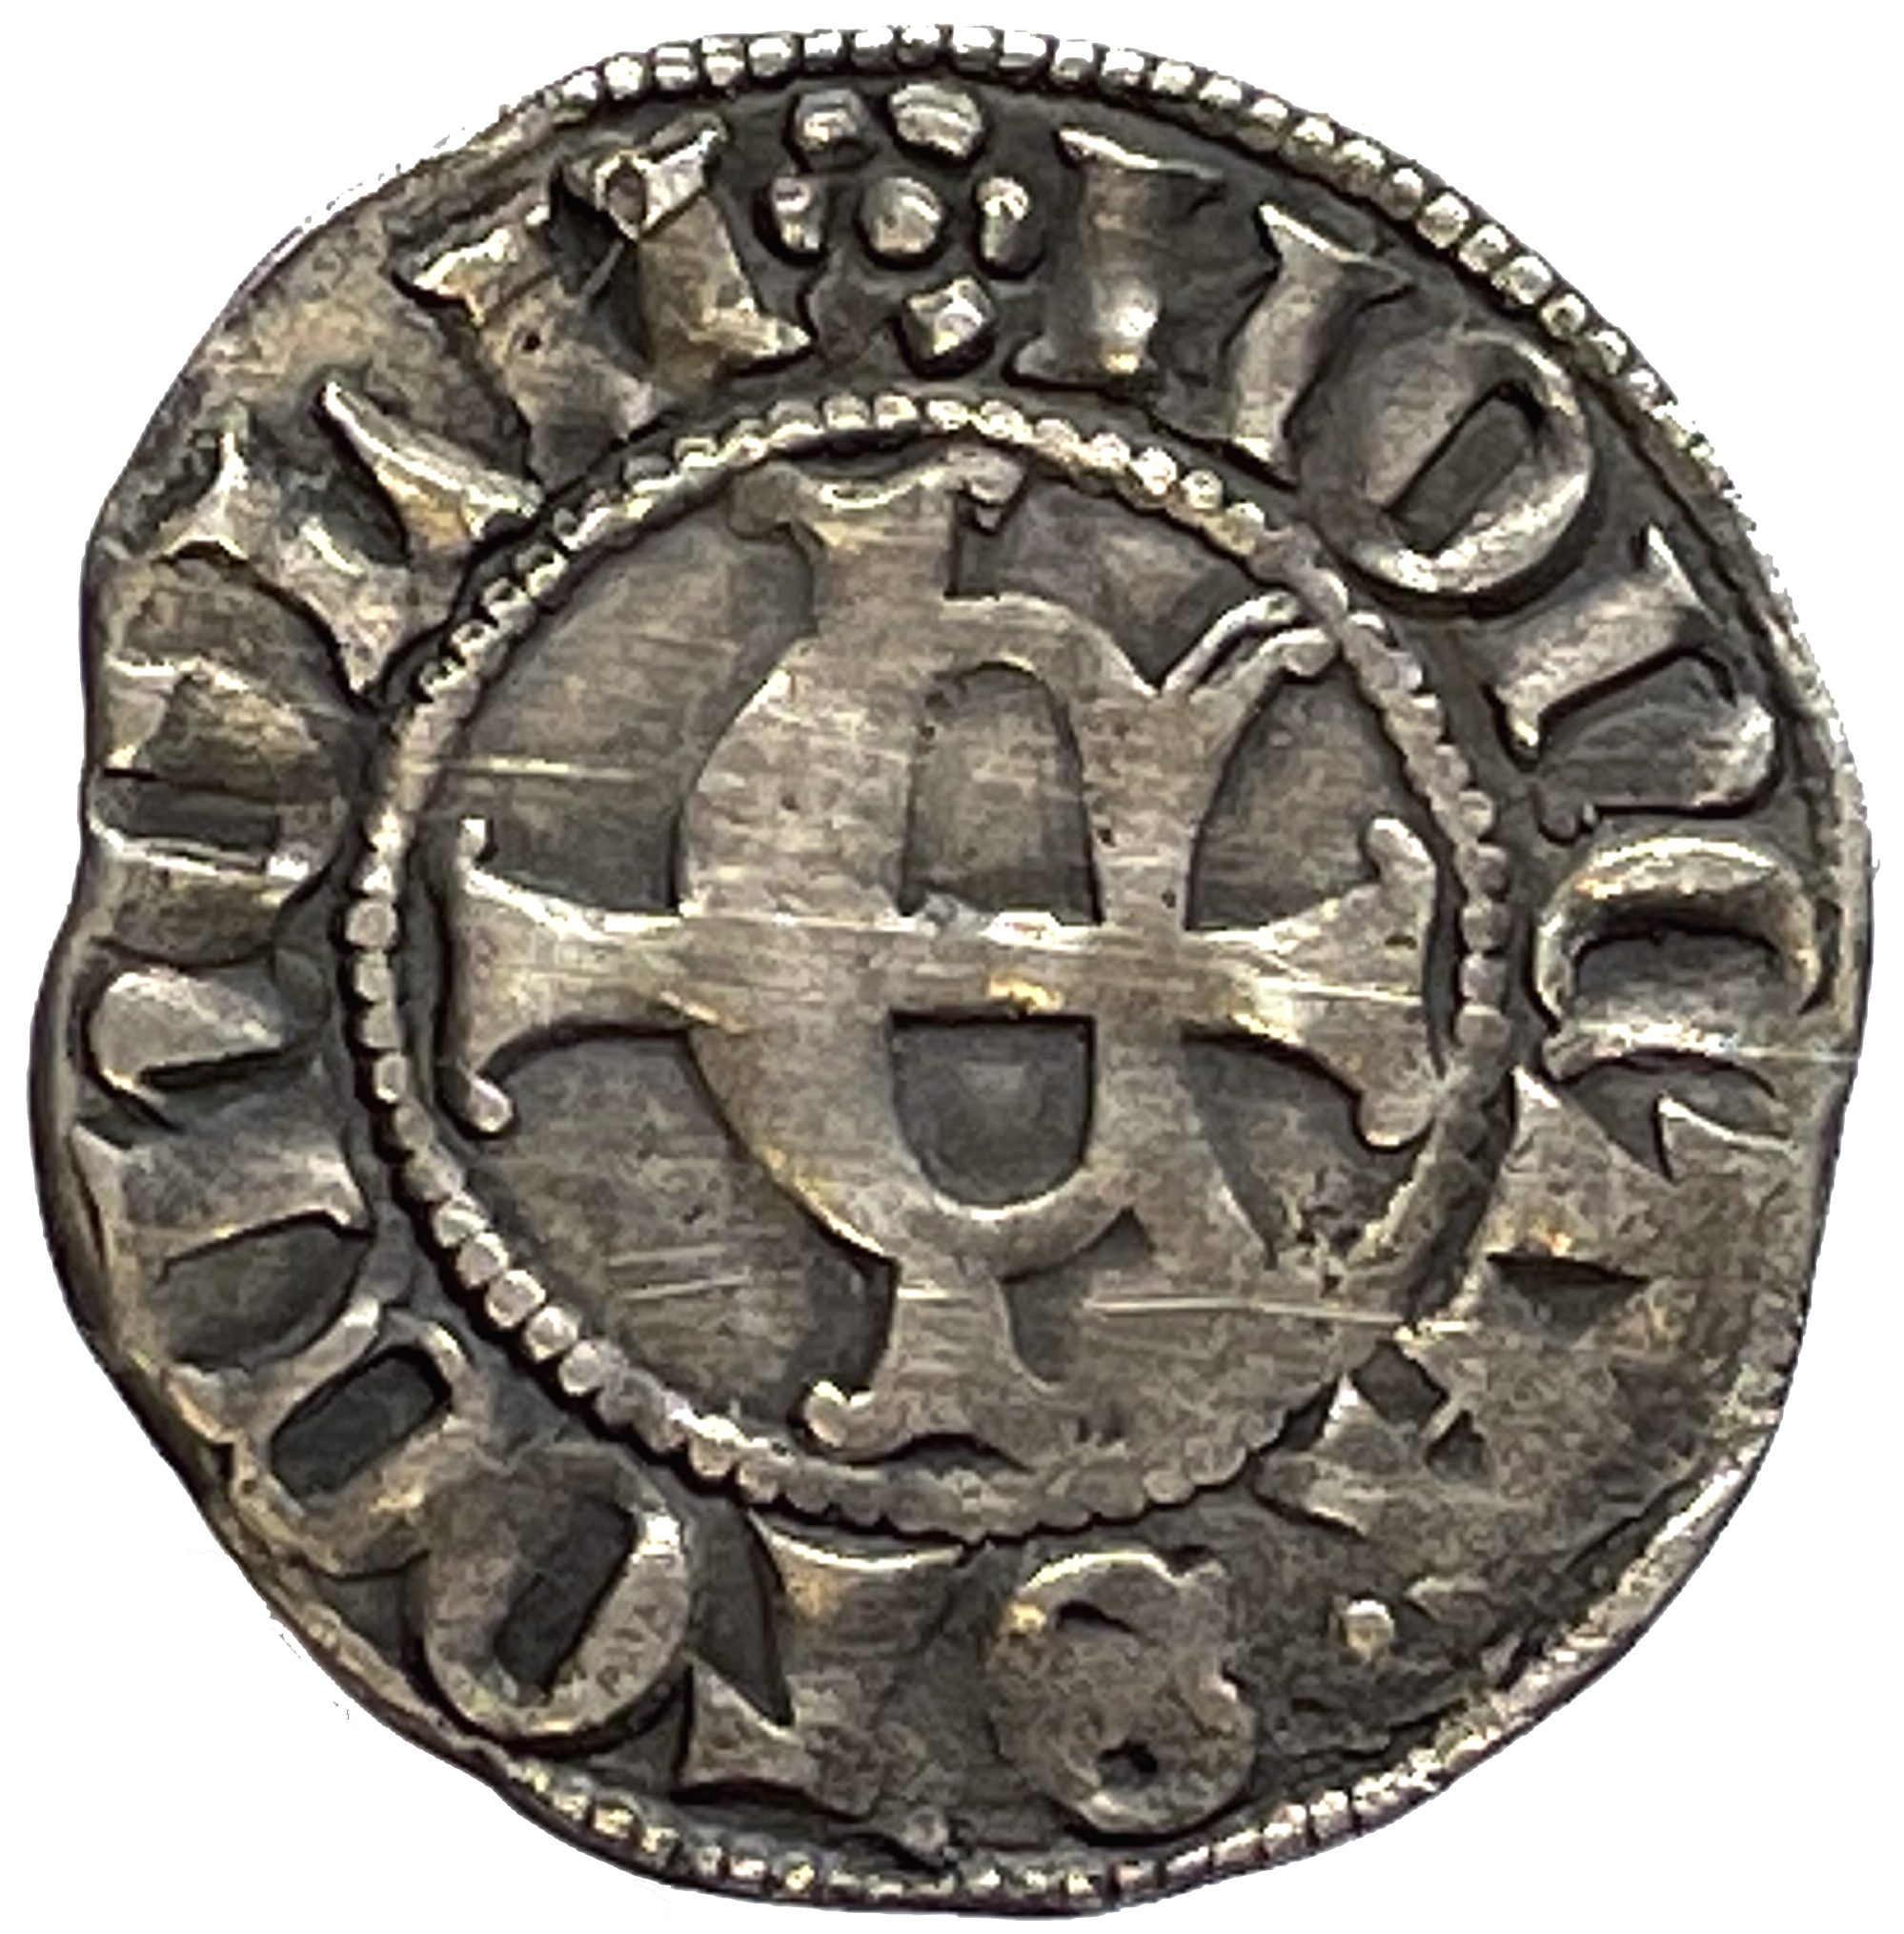 Erik av Pommern 1396-1439 - Stockholm - Örtug med ankarformade korsändar